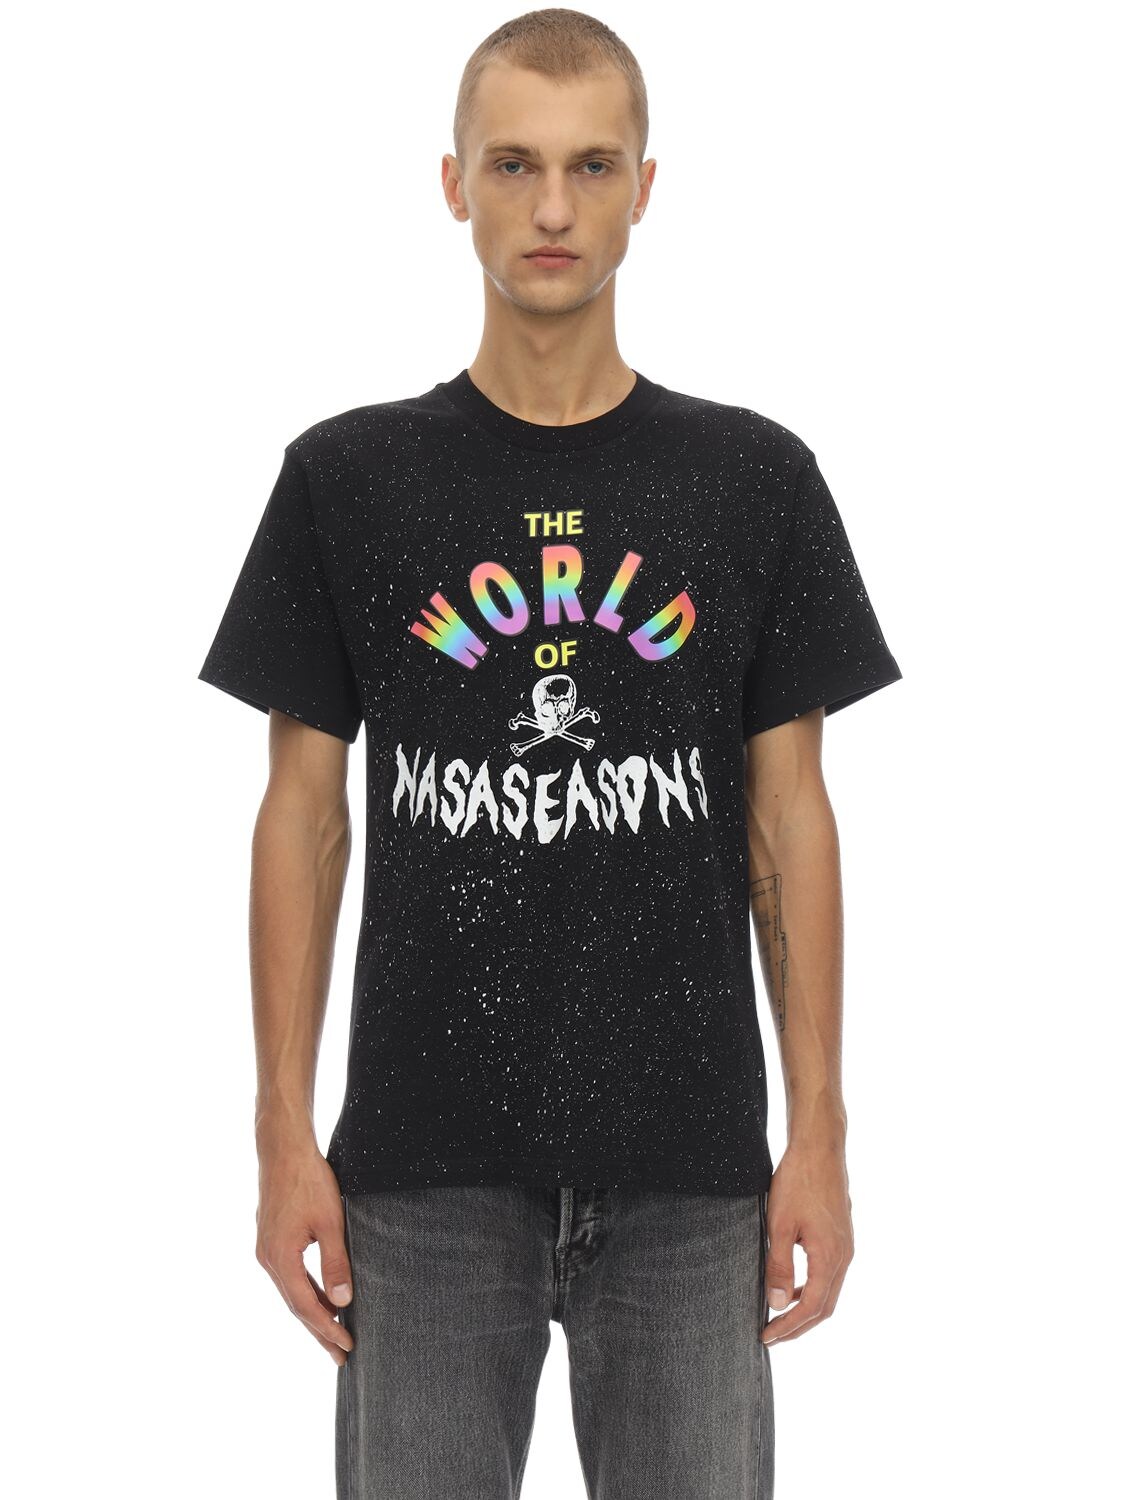 NASASEASONS “WORLD OF NASASEASONS”纯棉T恤,70IR5T006-QKXBQ0S1